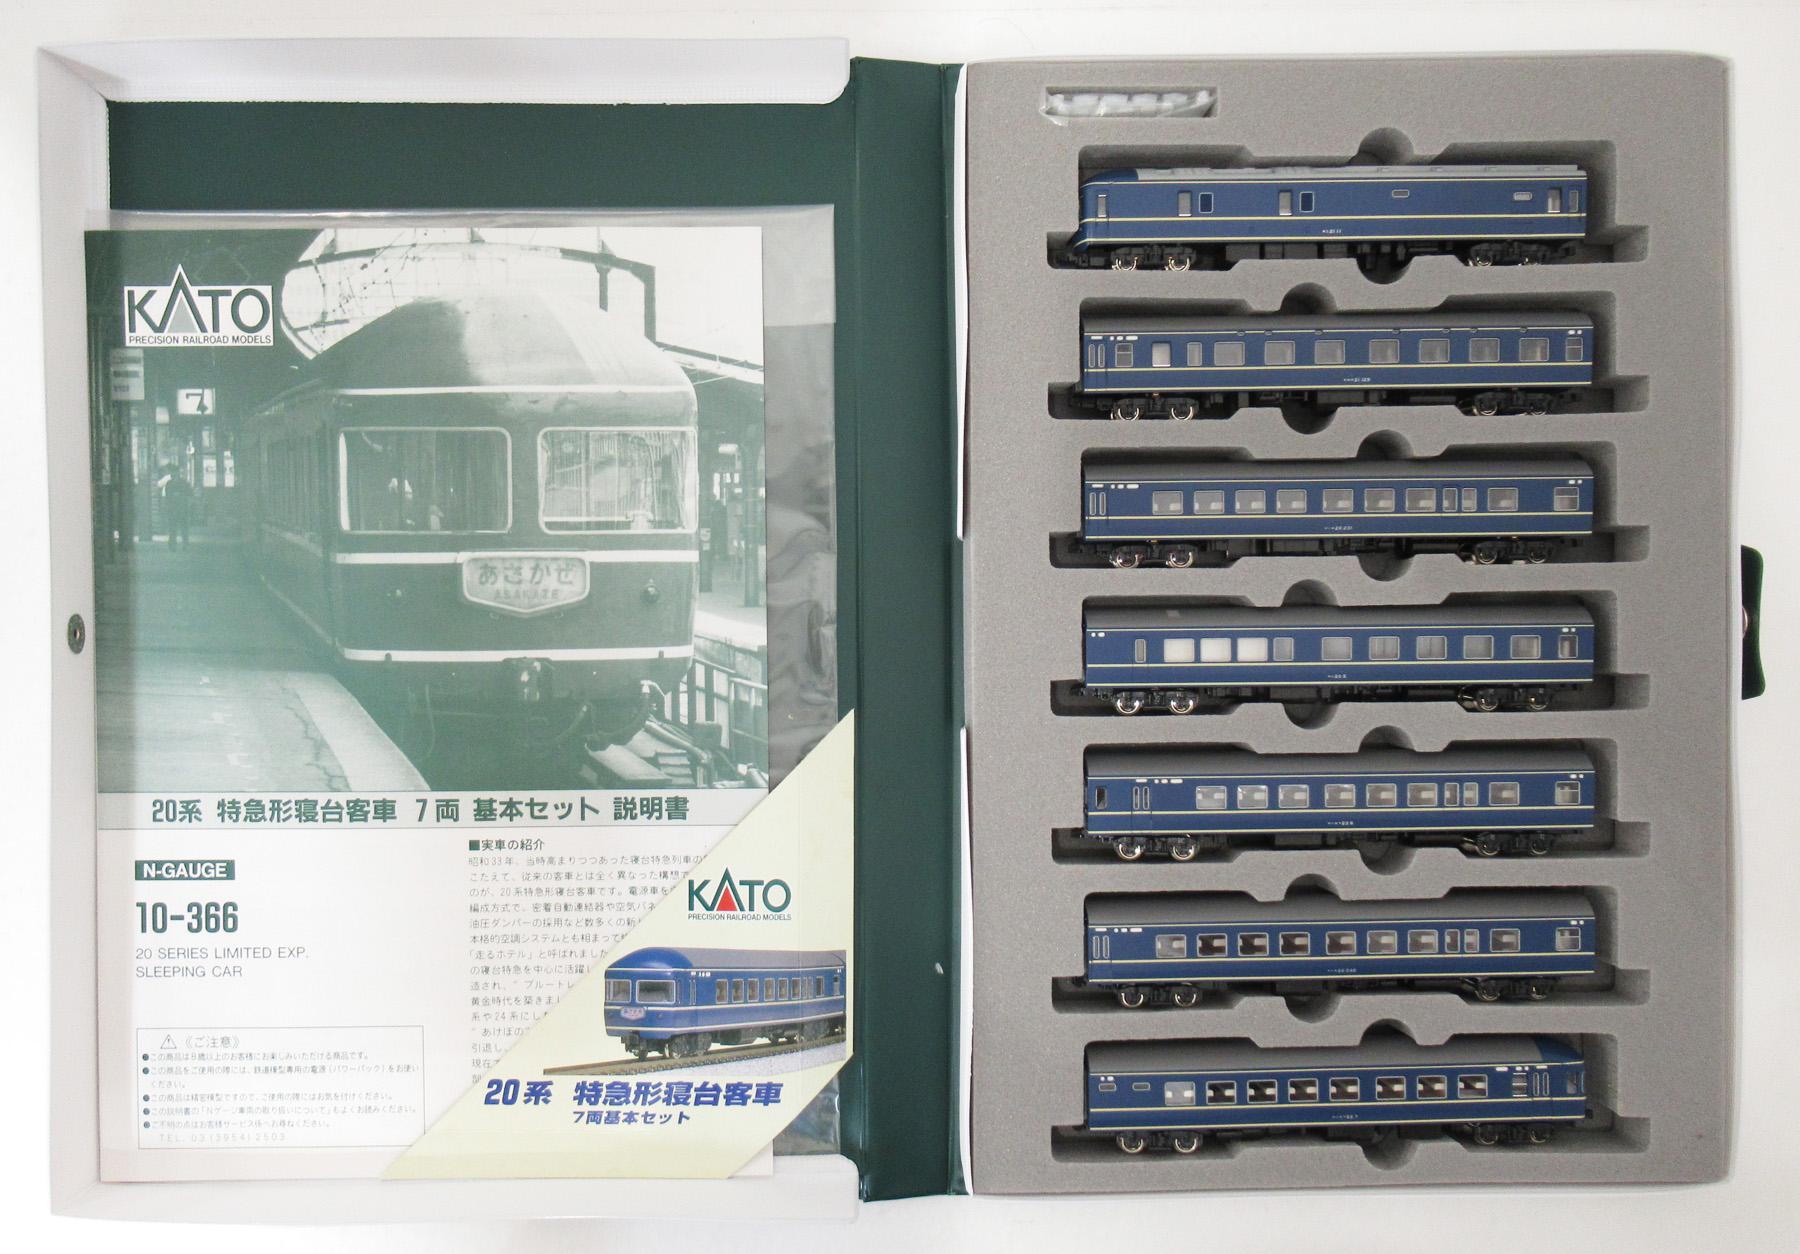 KATO 10-366 20系 寝台客車 7両セット - 鉄道模型